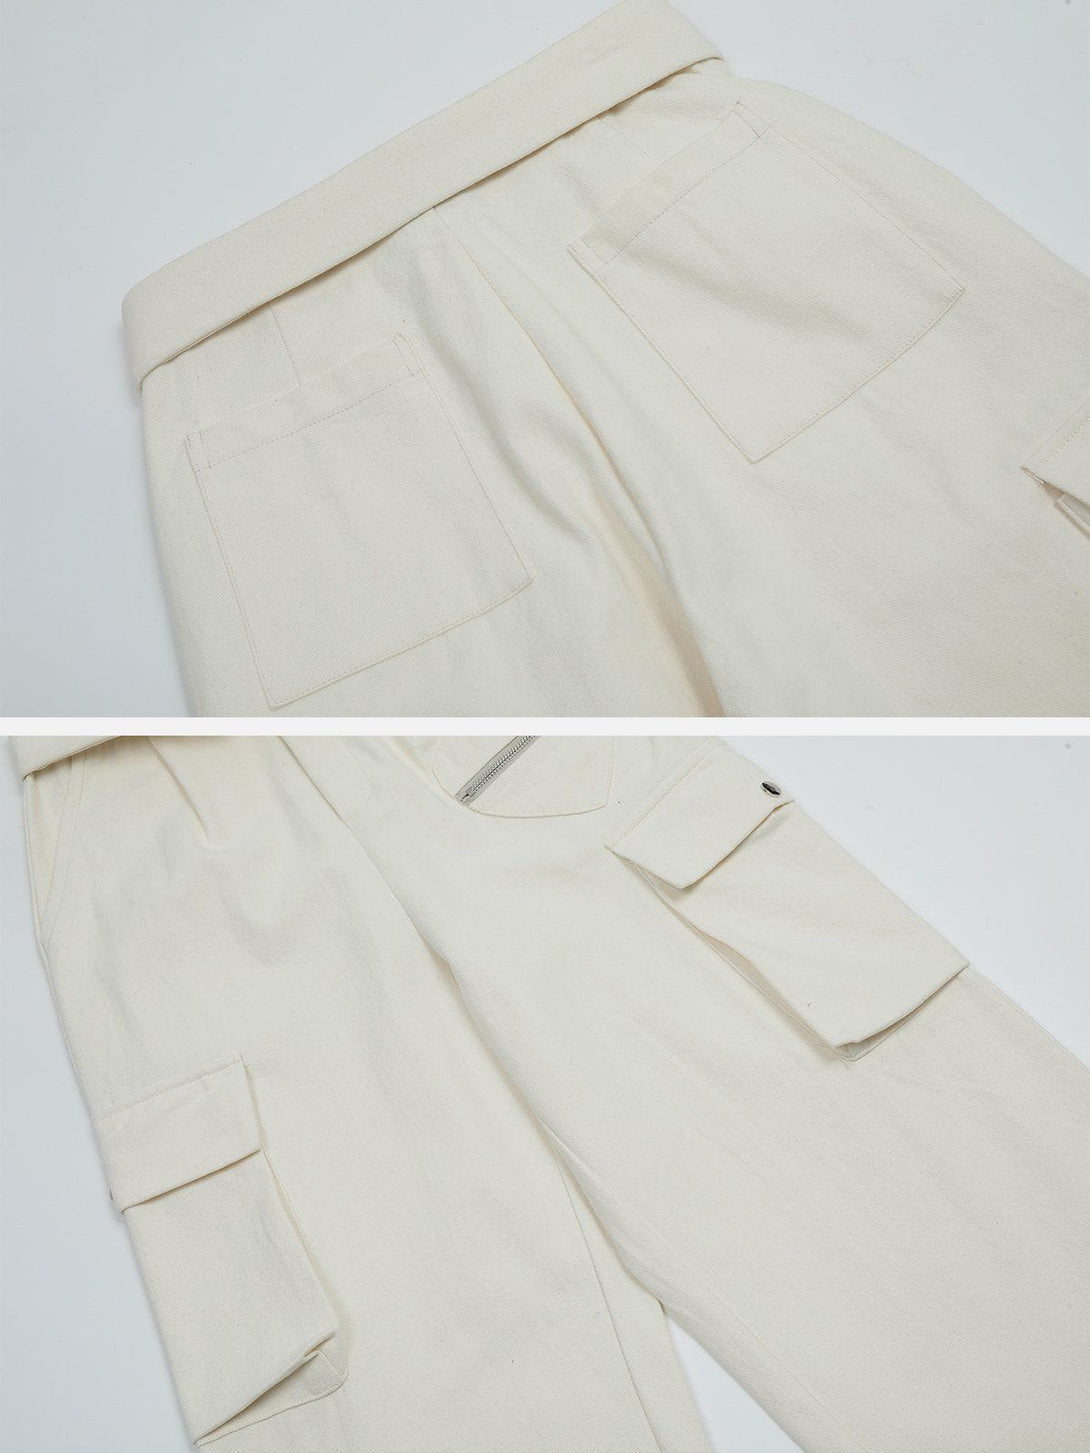 Levefly - Zipper Pocket Cargo Pants - Streetwear Fashion - levefly.com